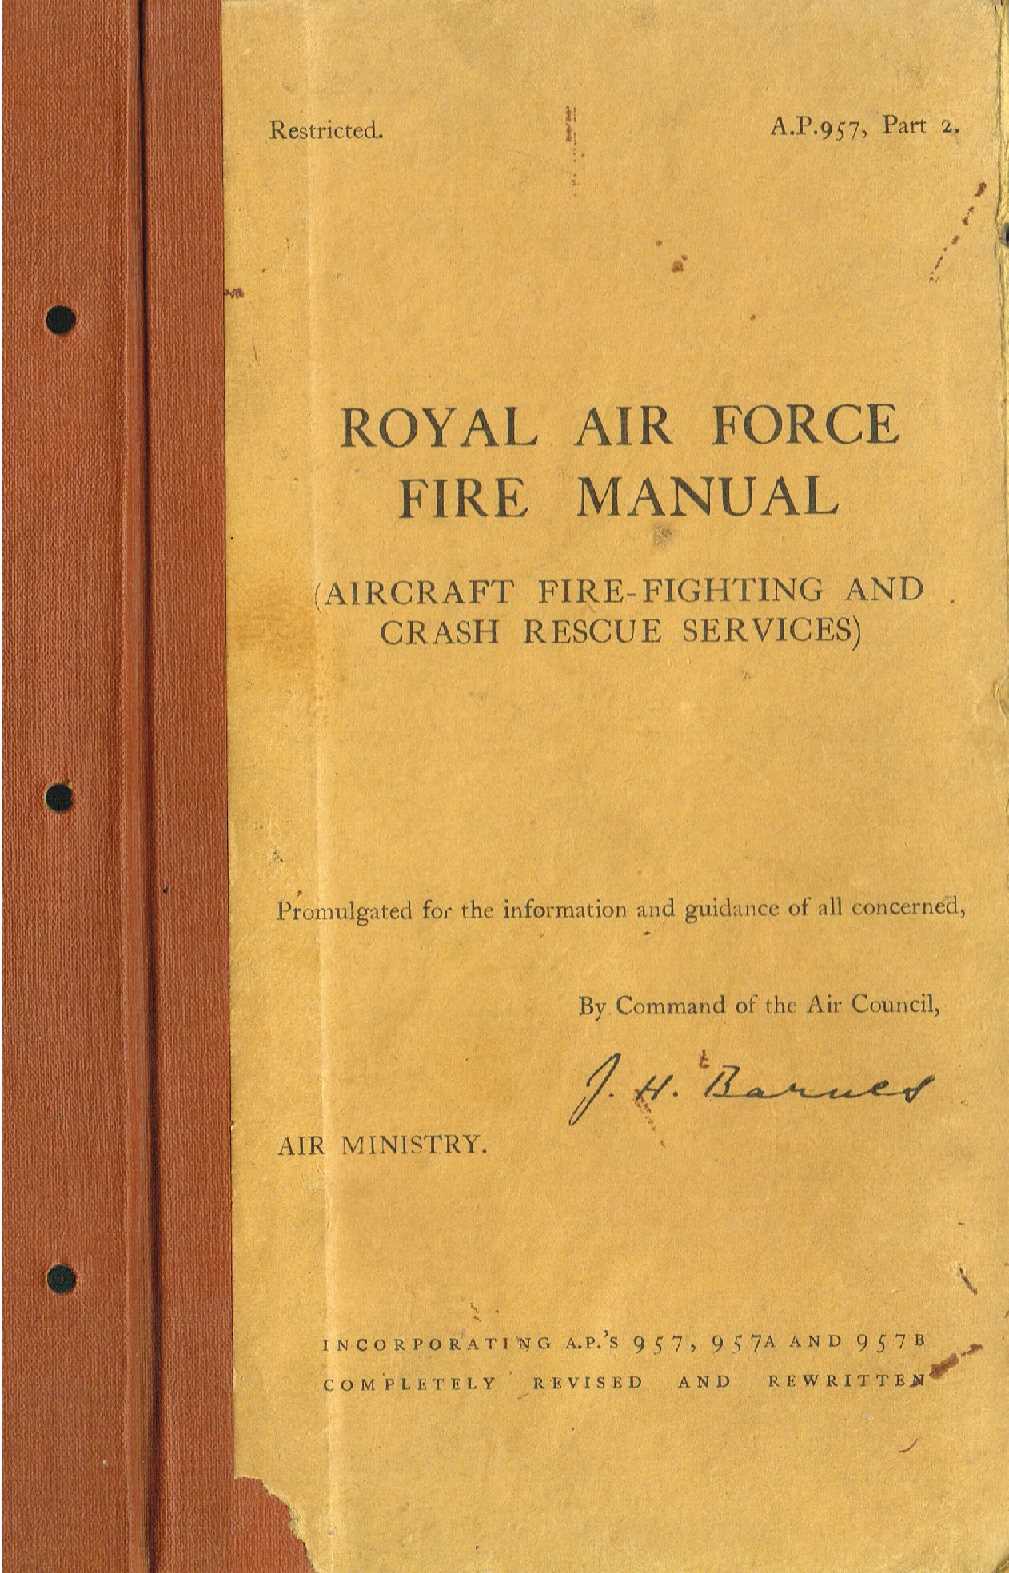 A.P.129 ROYAL AIR FORCE WW II FLYING TRAINING MANUAL 